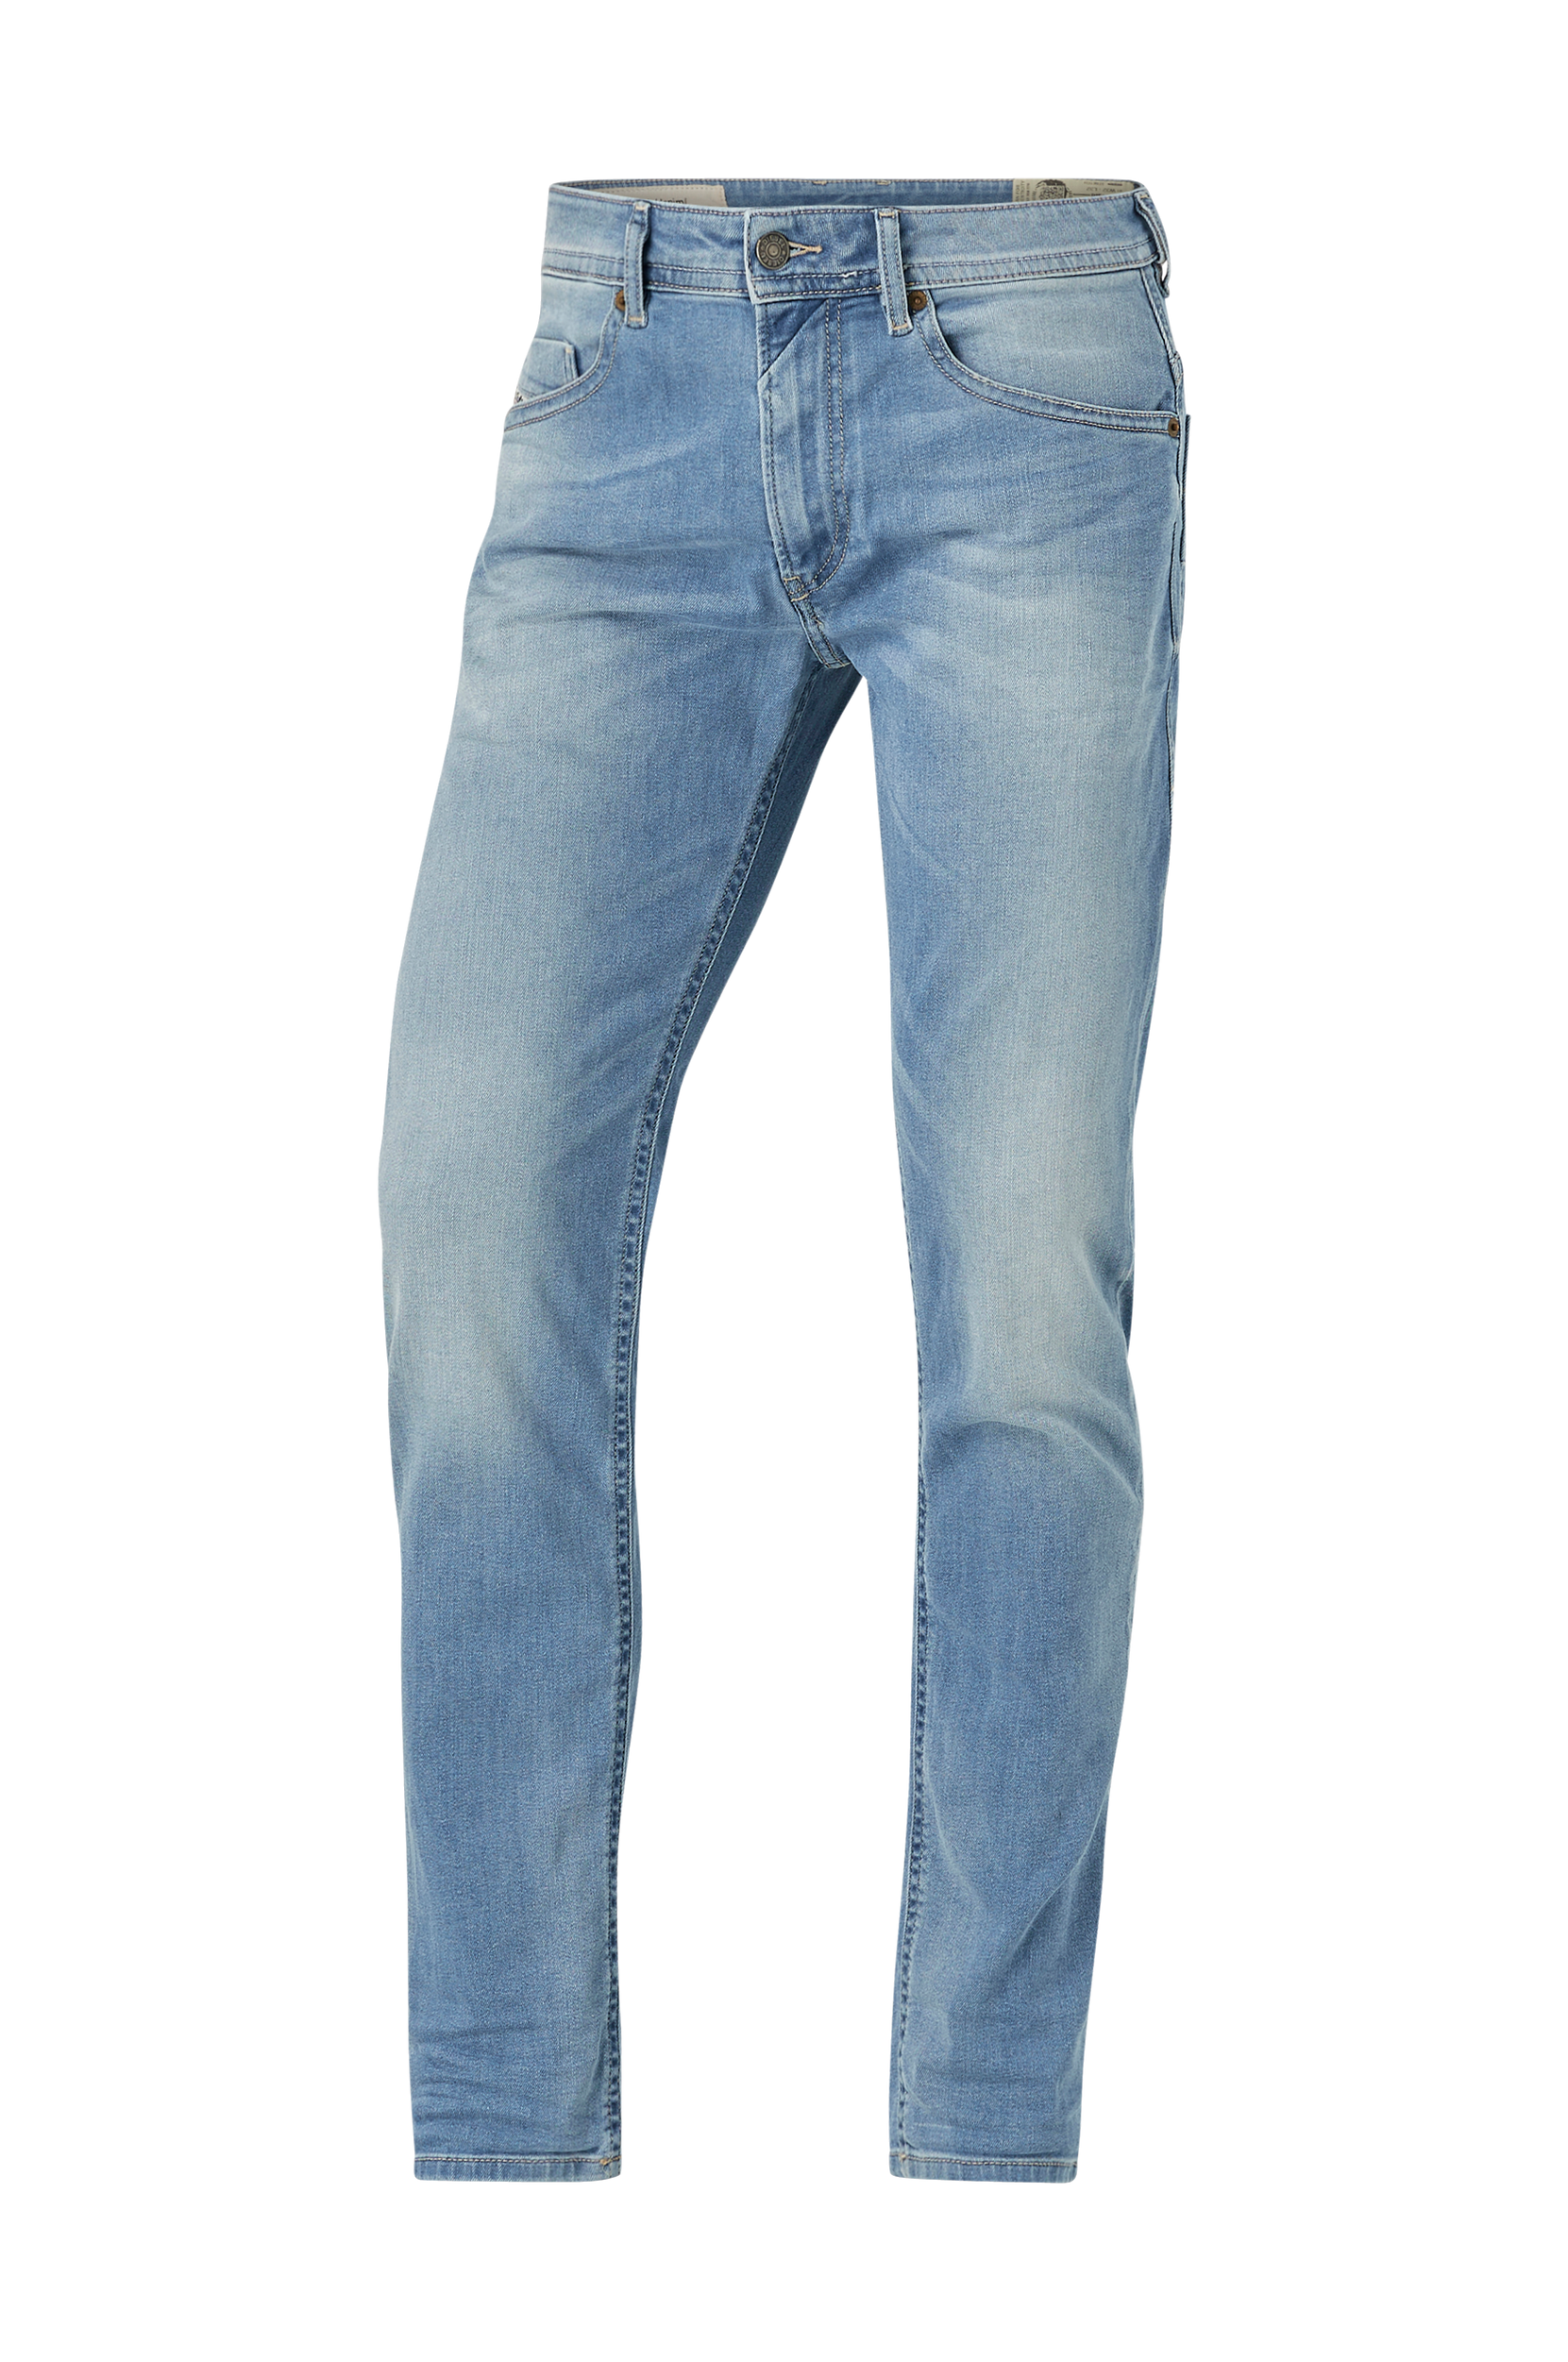 tyktflydende liner pensum Diesel slim jeans – Jeans Thommer-X slim-skinny til herre i 069mn -  Pashion.dk